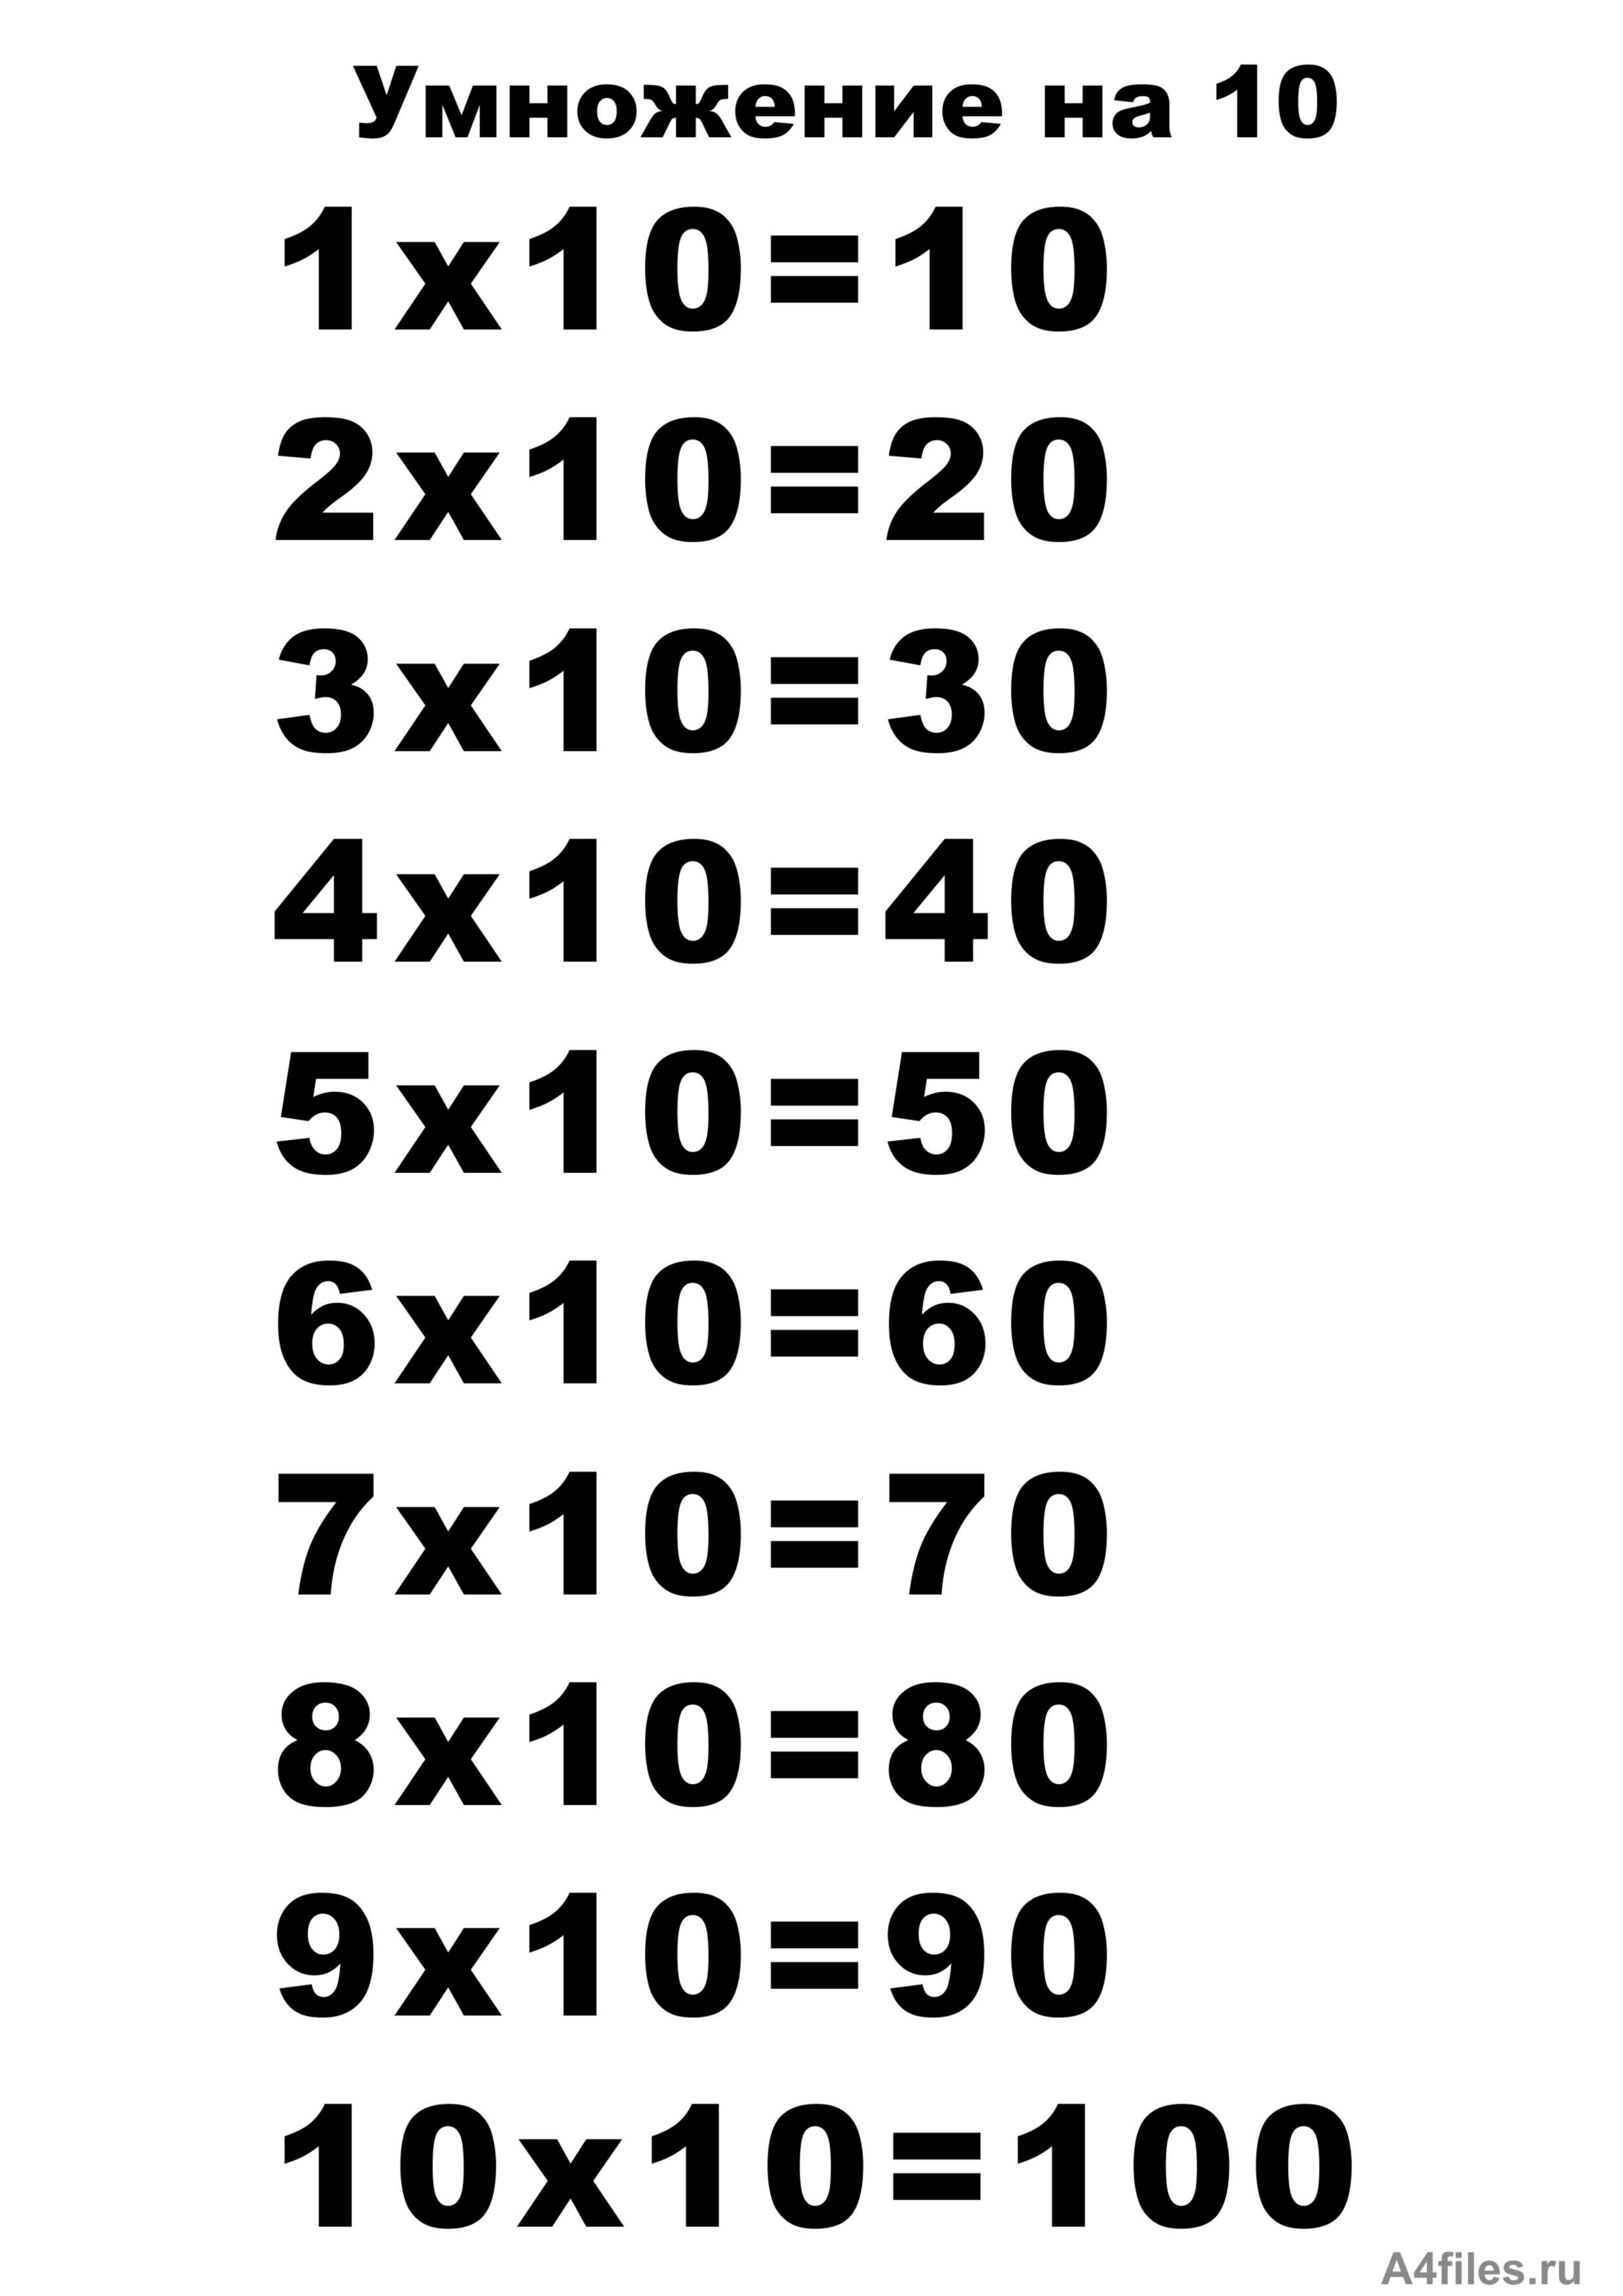 10 умножить на 10 лет. Таблицв умнажения на "10. Таблица умножения на 10 распечатать а4 Формат. Таблица на 10. Т͇а͇б͇л͇и͇ц͇а͇ У͇М͇Н͇О͇Ж͇Е͇Н͇И͇Й͇.